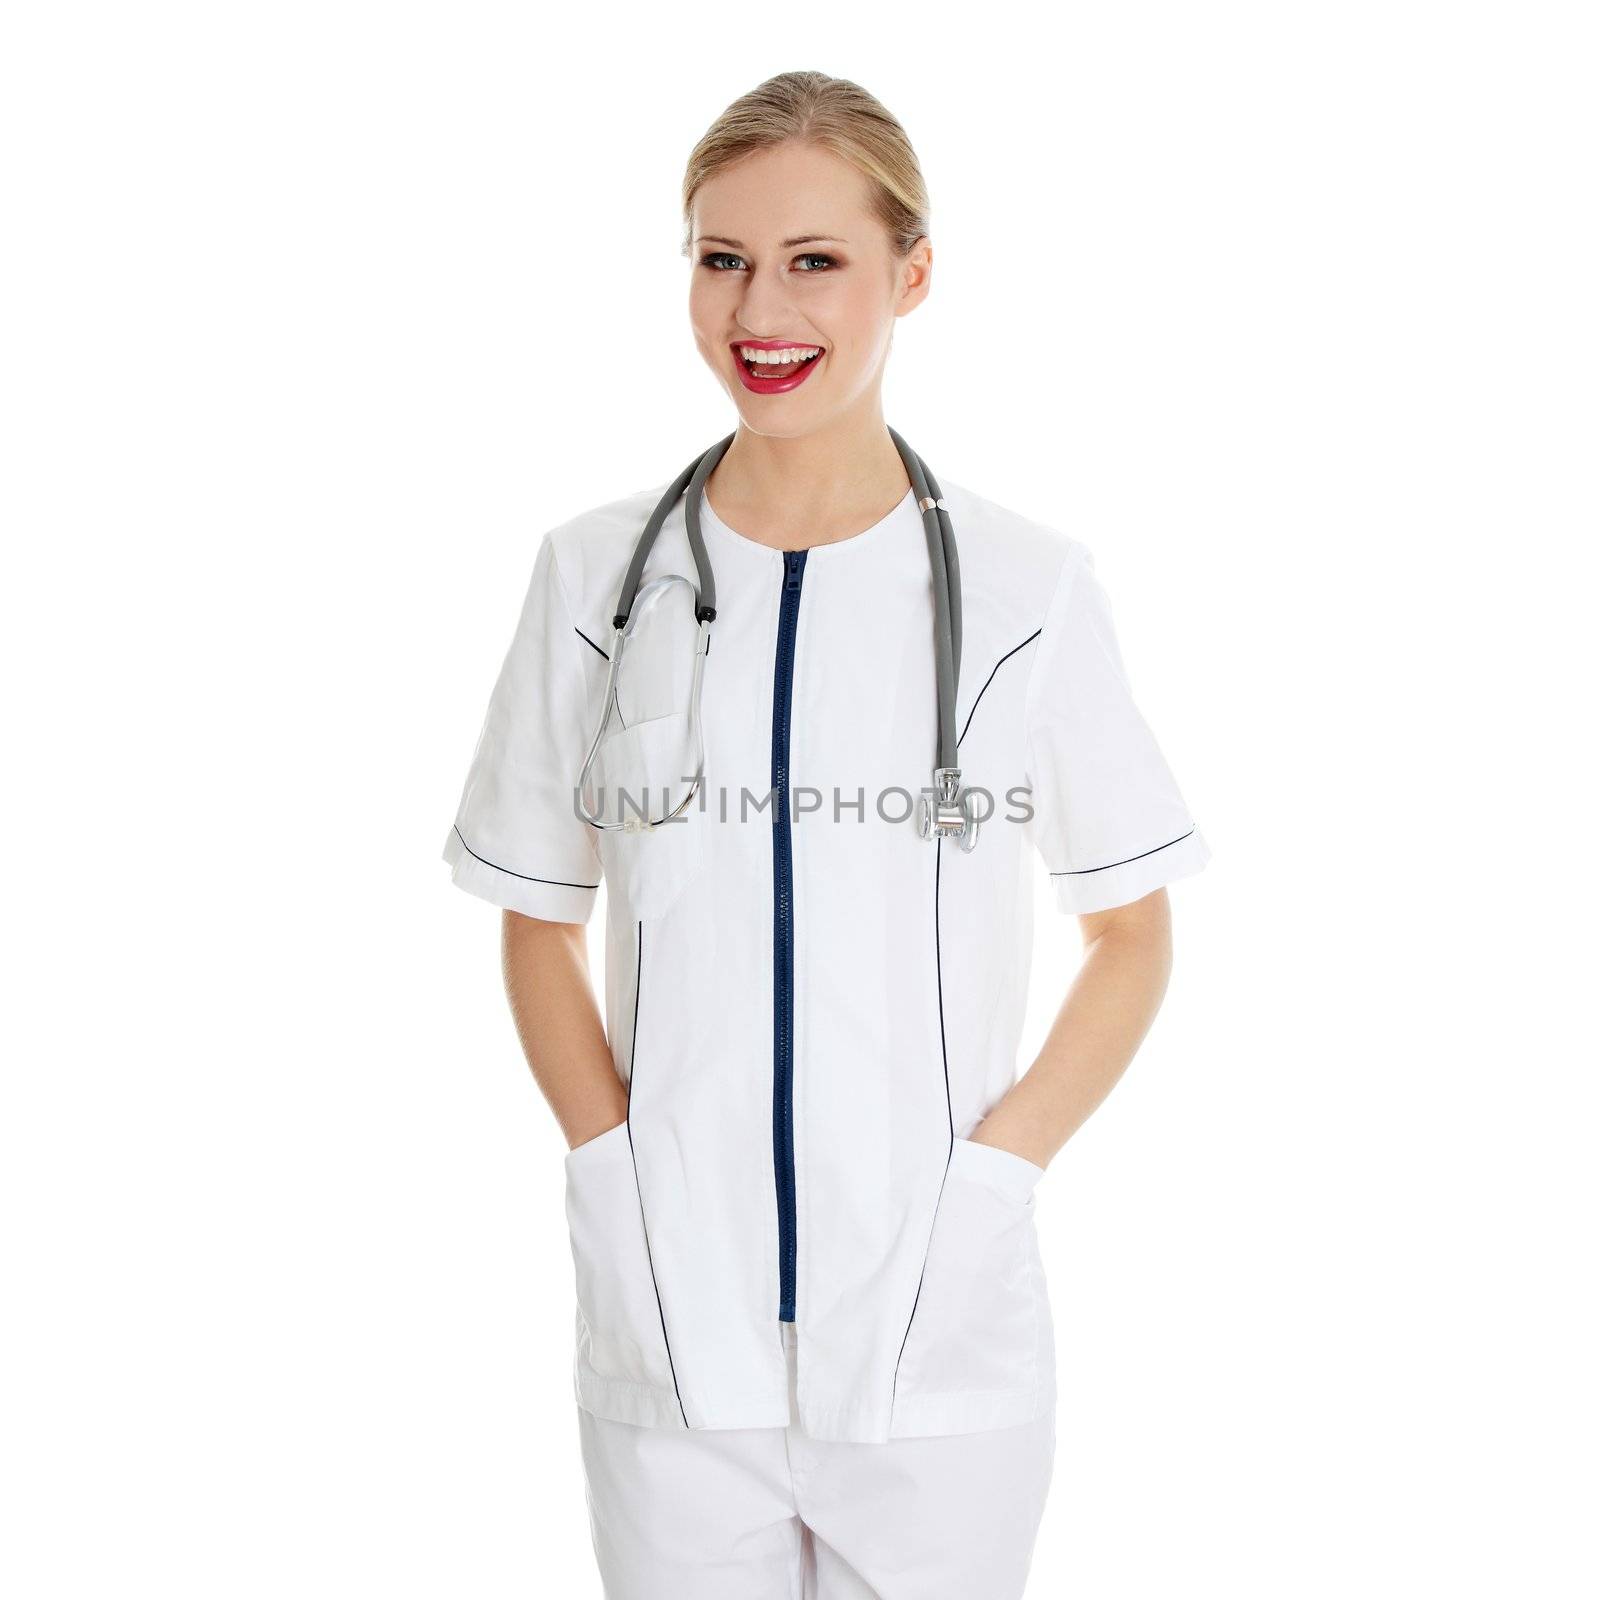 Female doctor or nurse, isolated on white